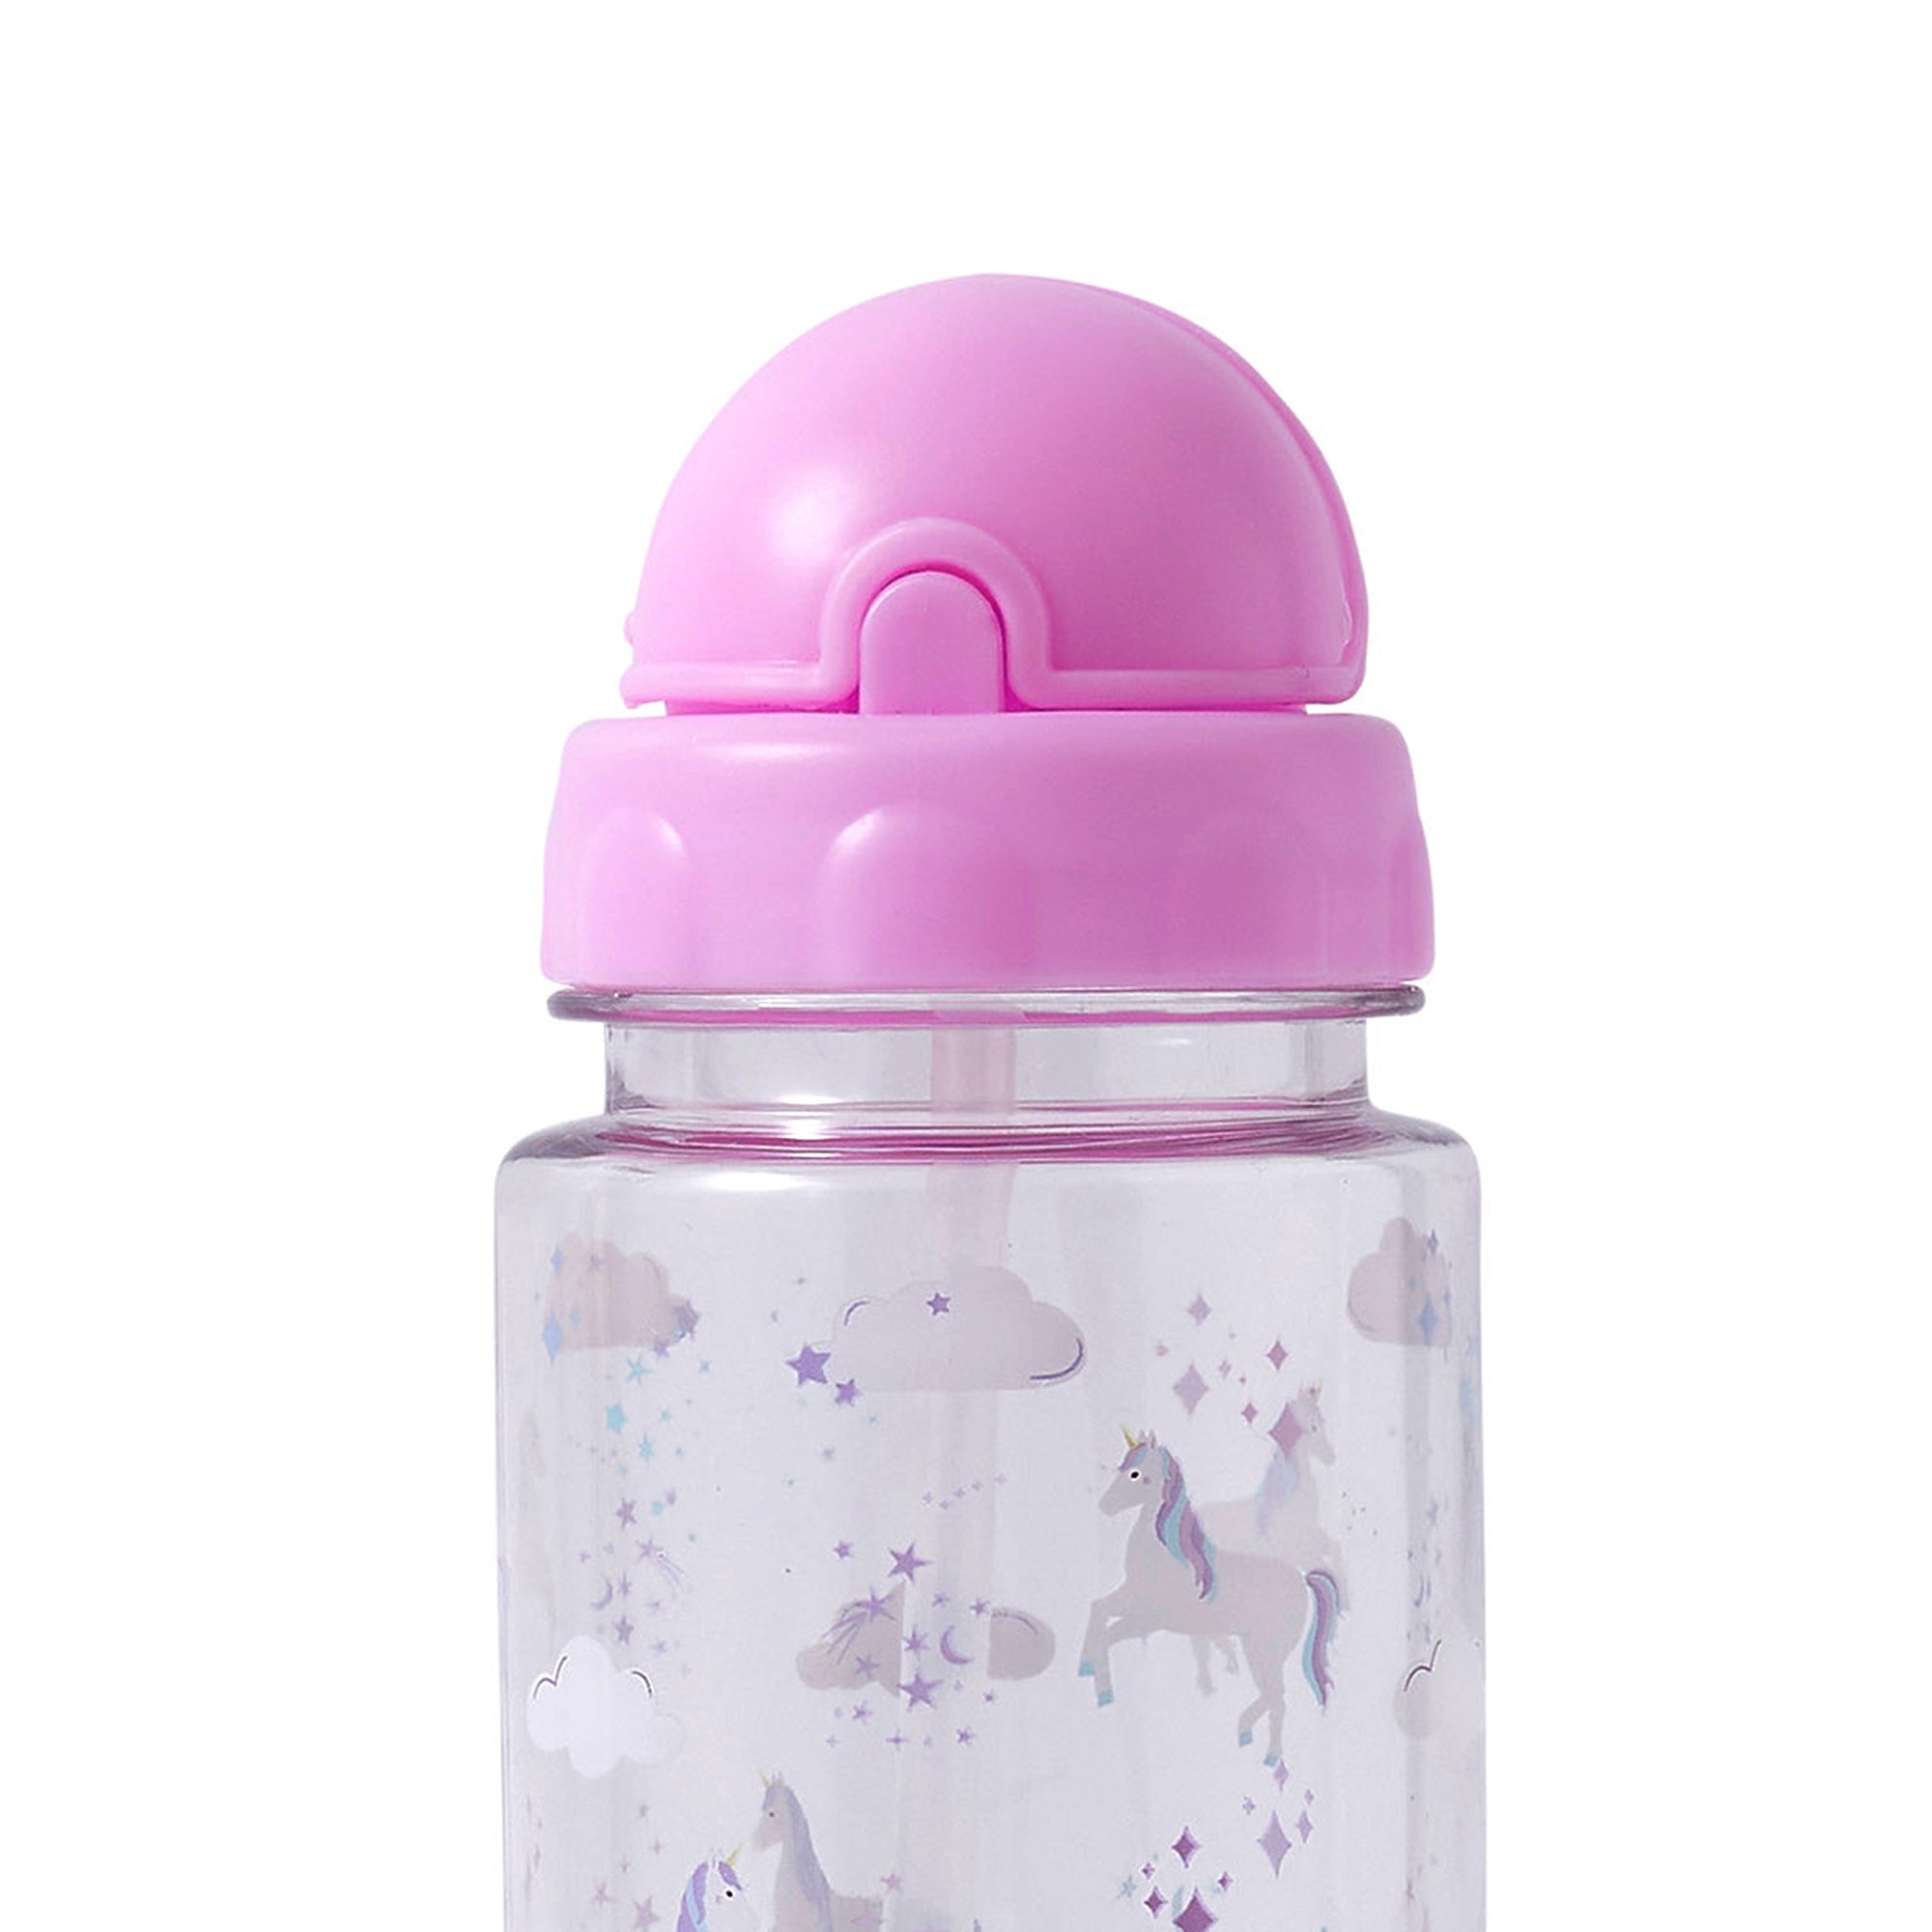 Accessorize London Girl's Magical Unicorn Plastic Water Bottle